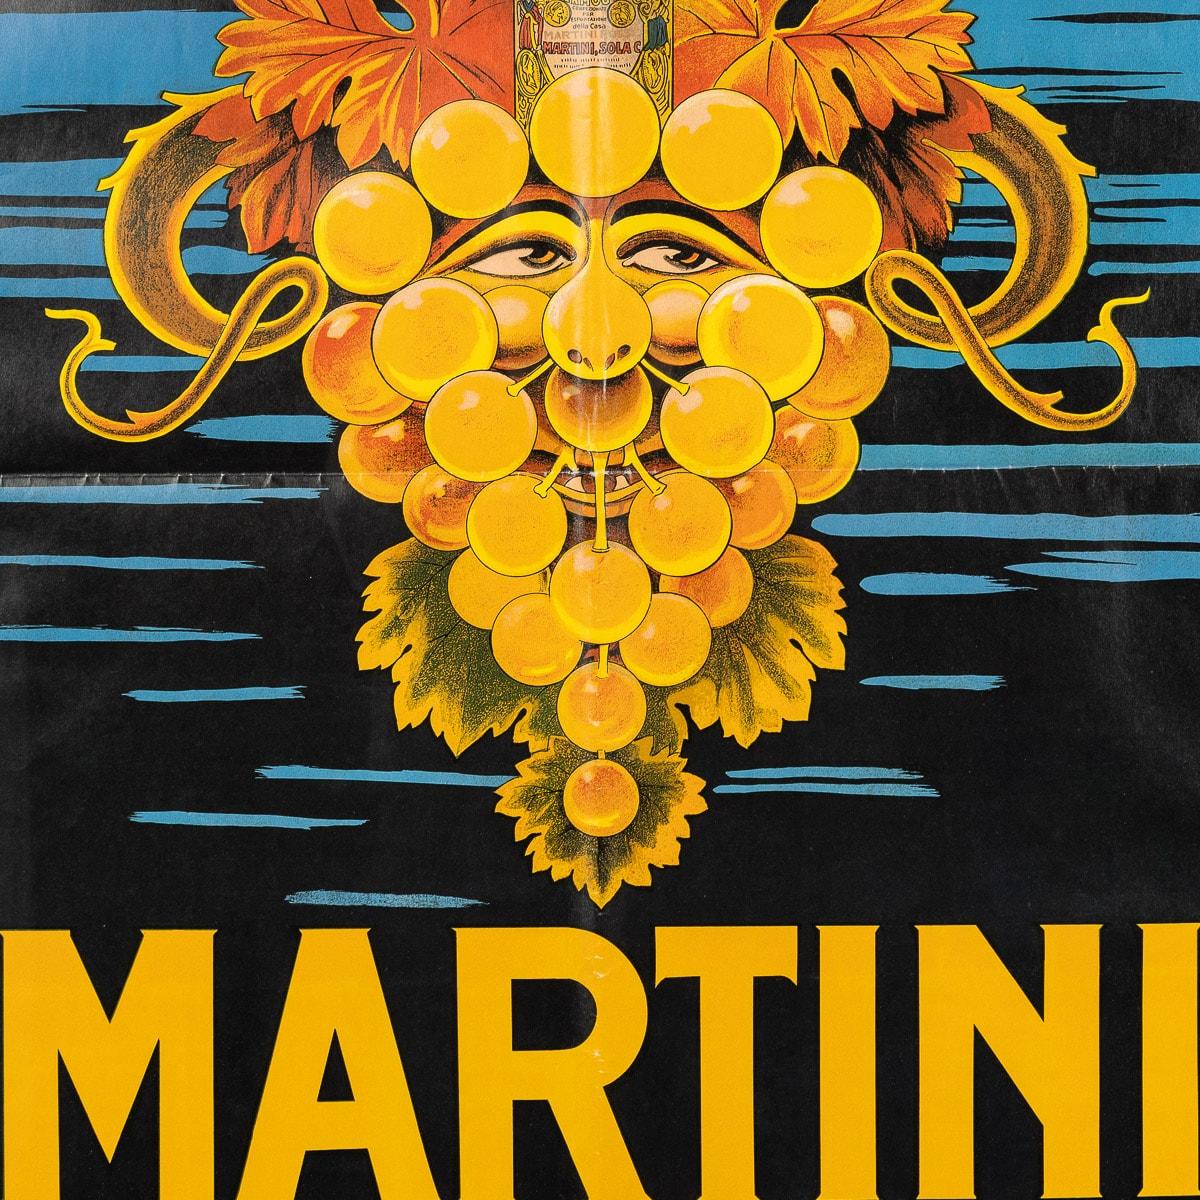 Framed Advertising Poster for Martini, Italy, C.1970 For Sale 1